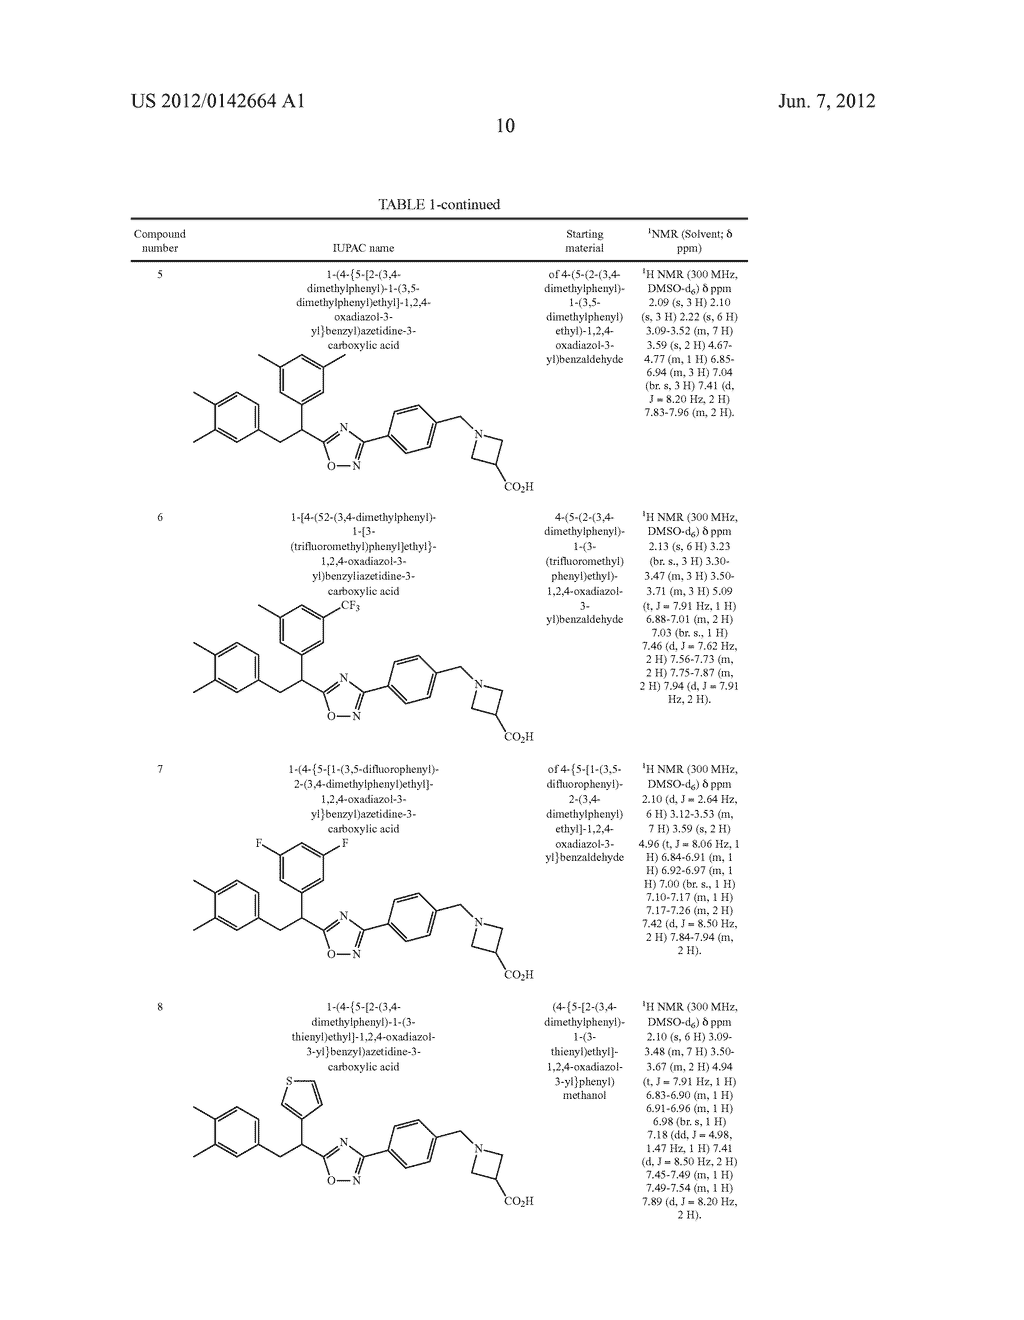 NOVEL BENZYL AZETIDINE DERIVATIVES AS SPHINGOSINE 1-PHOSPHATE (S1P)     RECEPTOR MODULATORS - diagram, schematic, and image 11